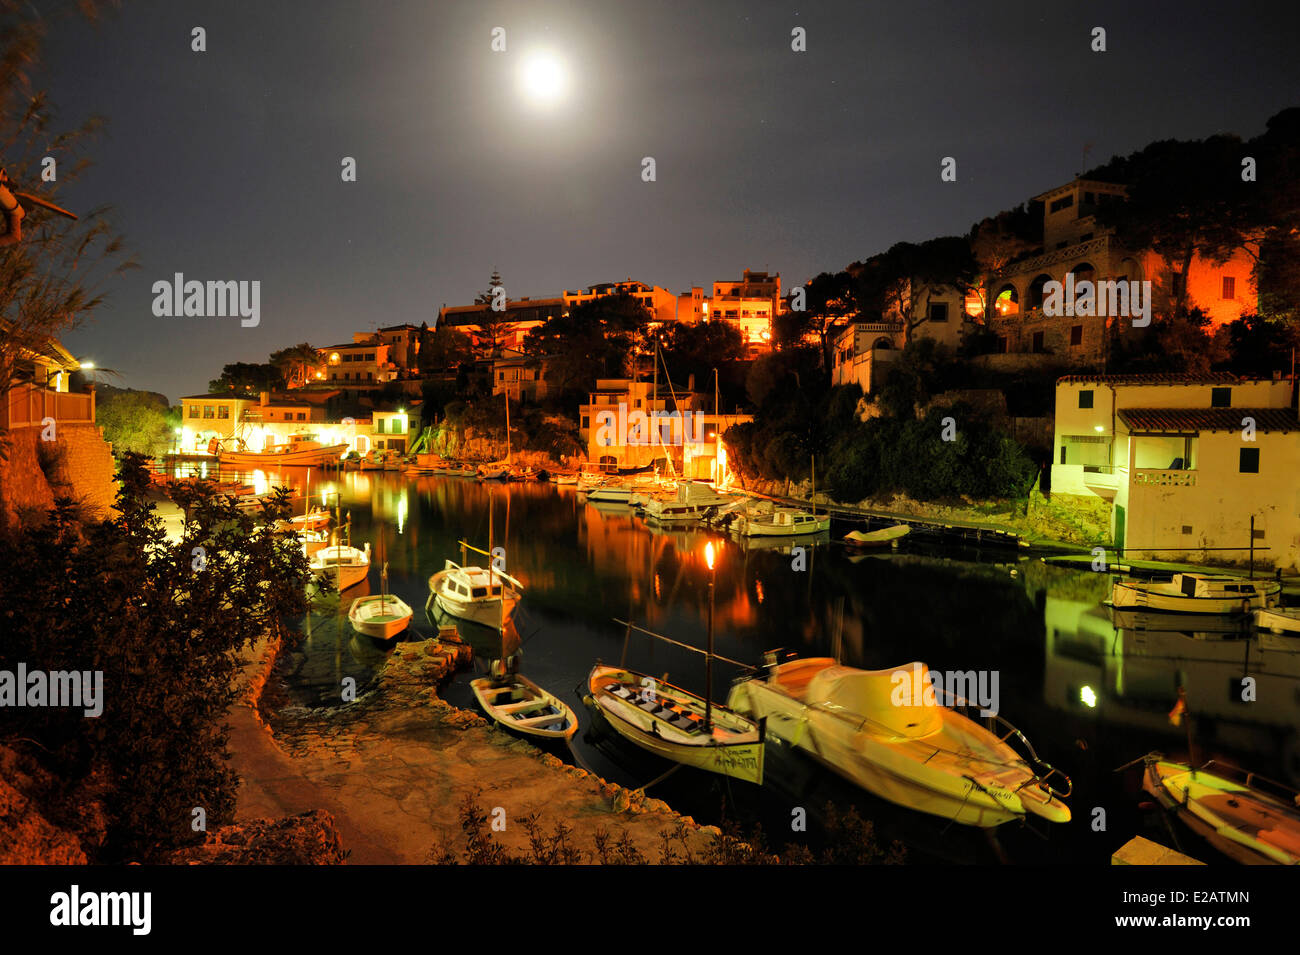 Spain, Balearic Islands, Mallorca, Cala Figuera, Port view at night Stock Photo